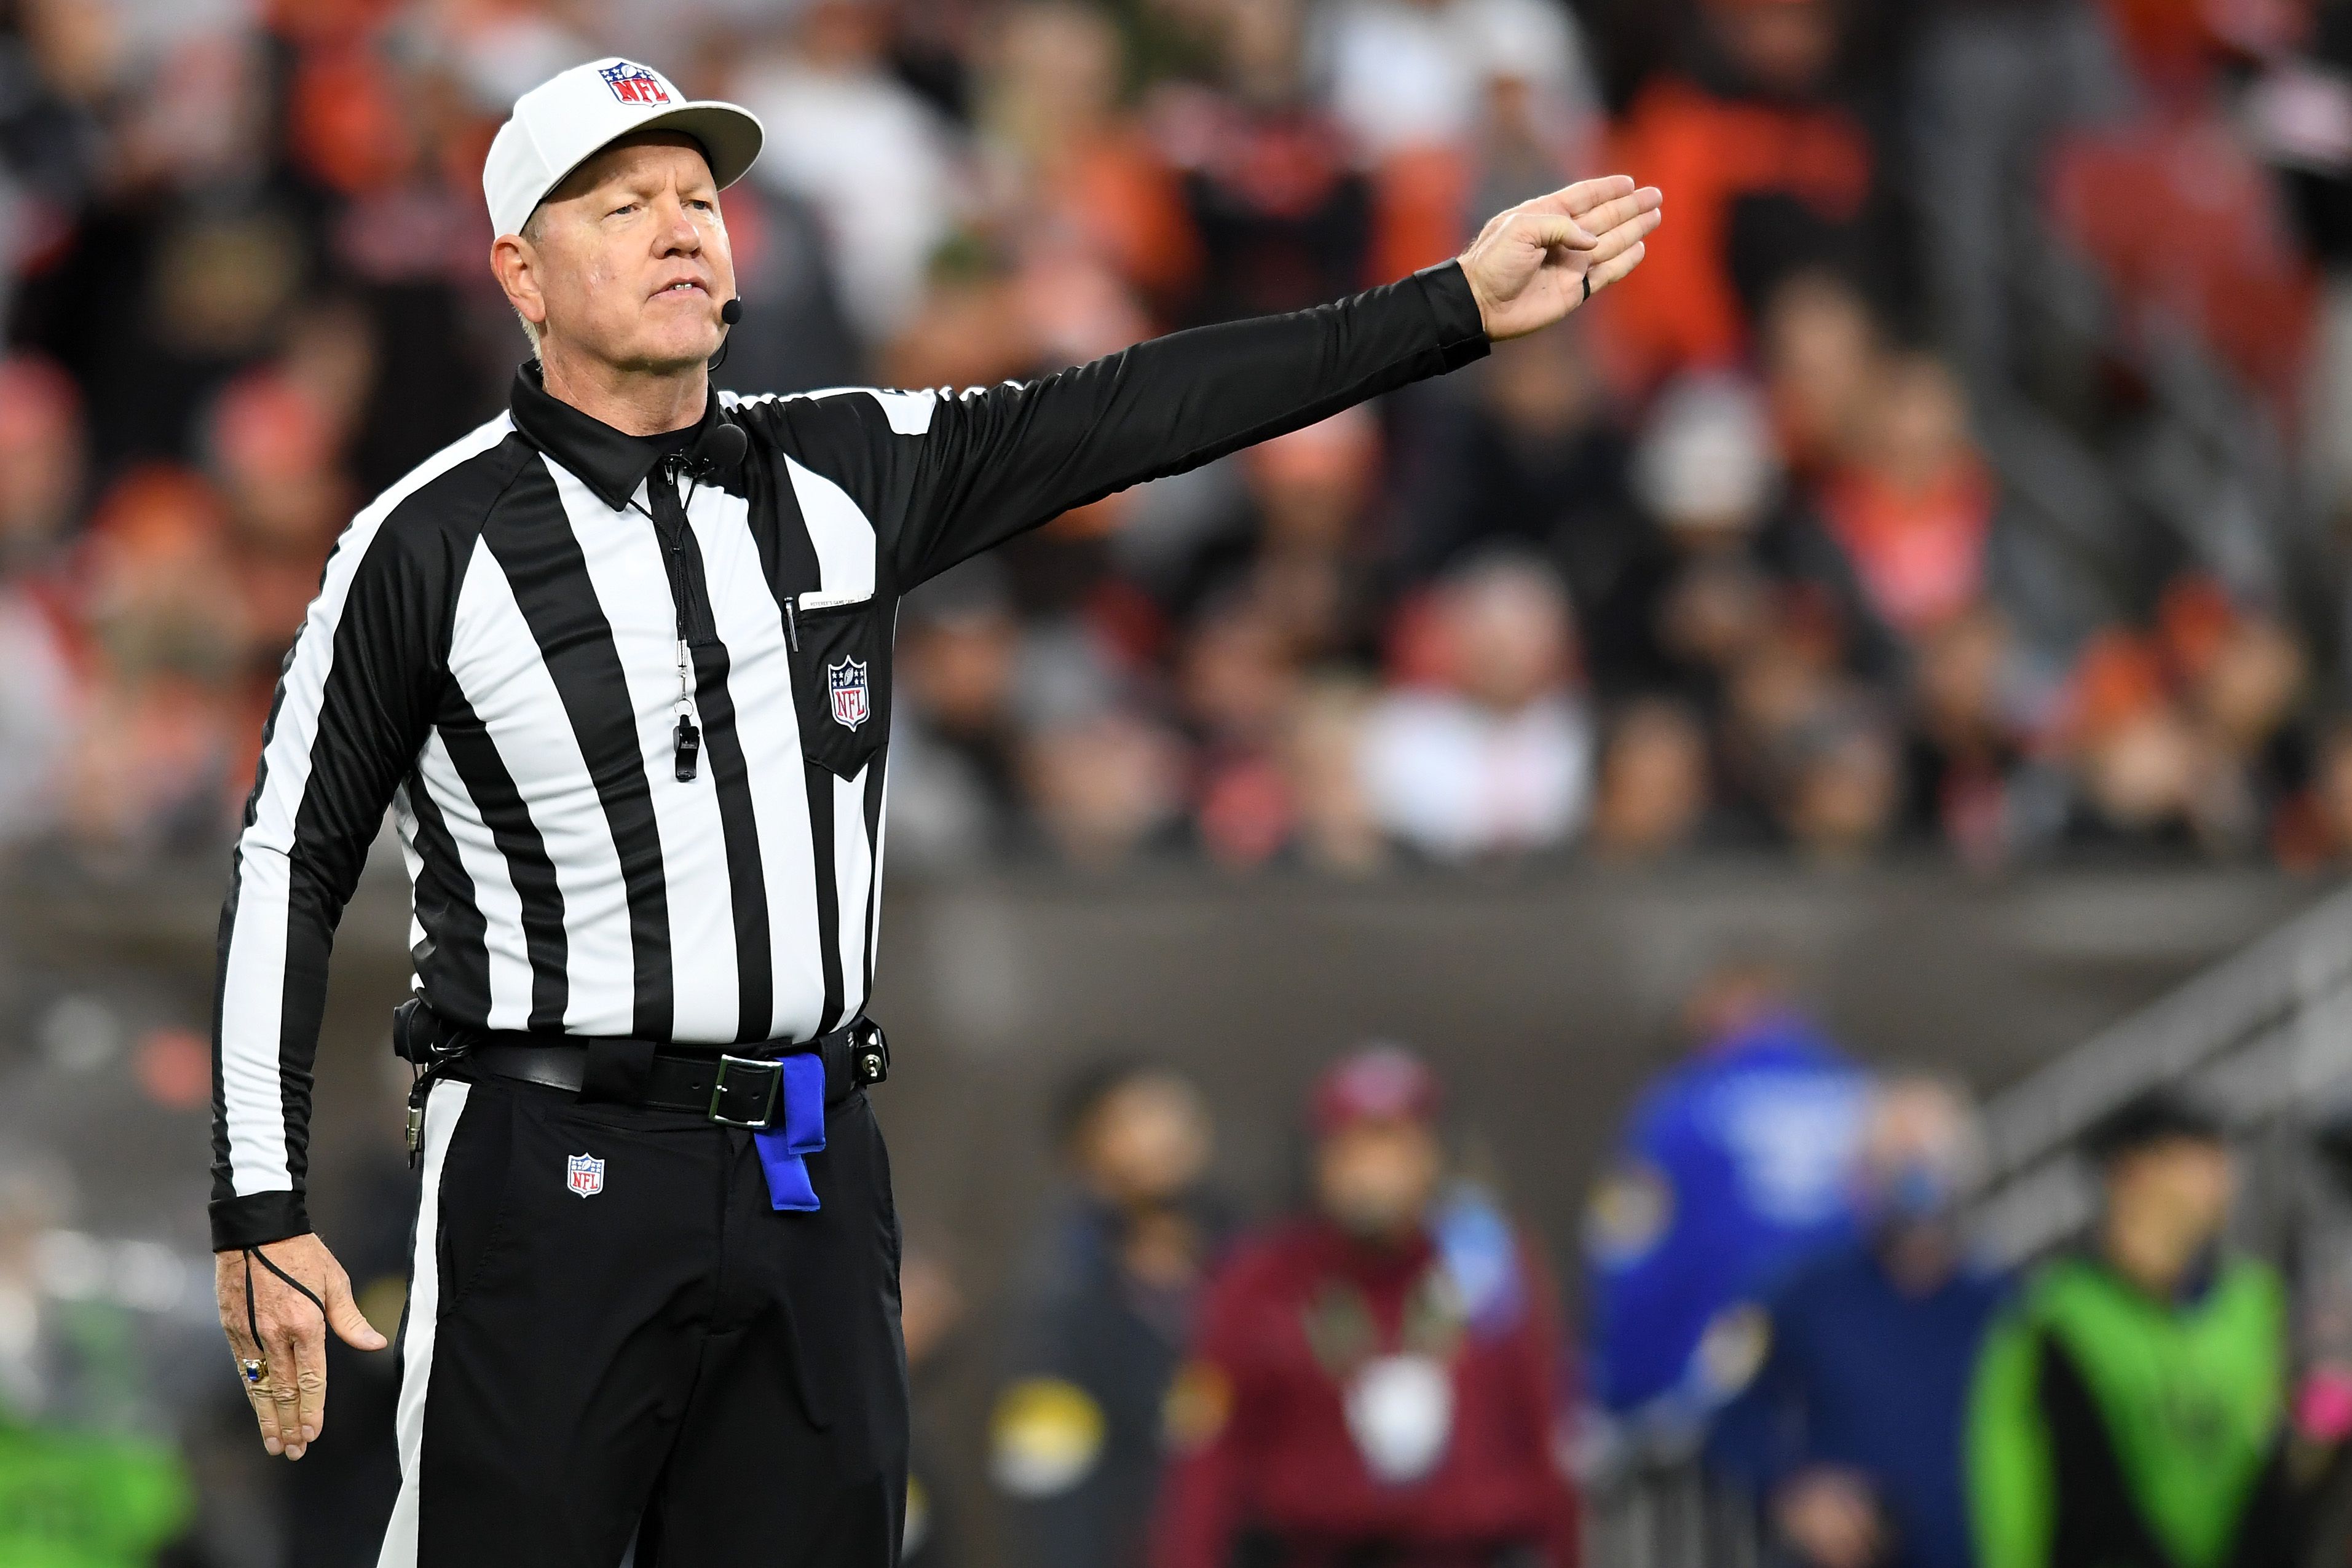 NFL referee addresses crowd